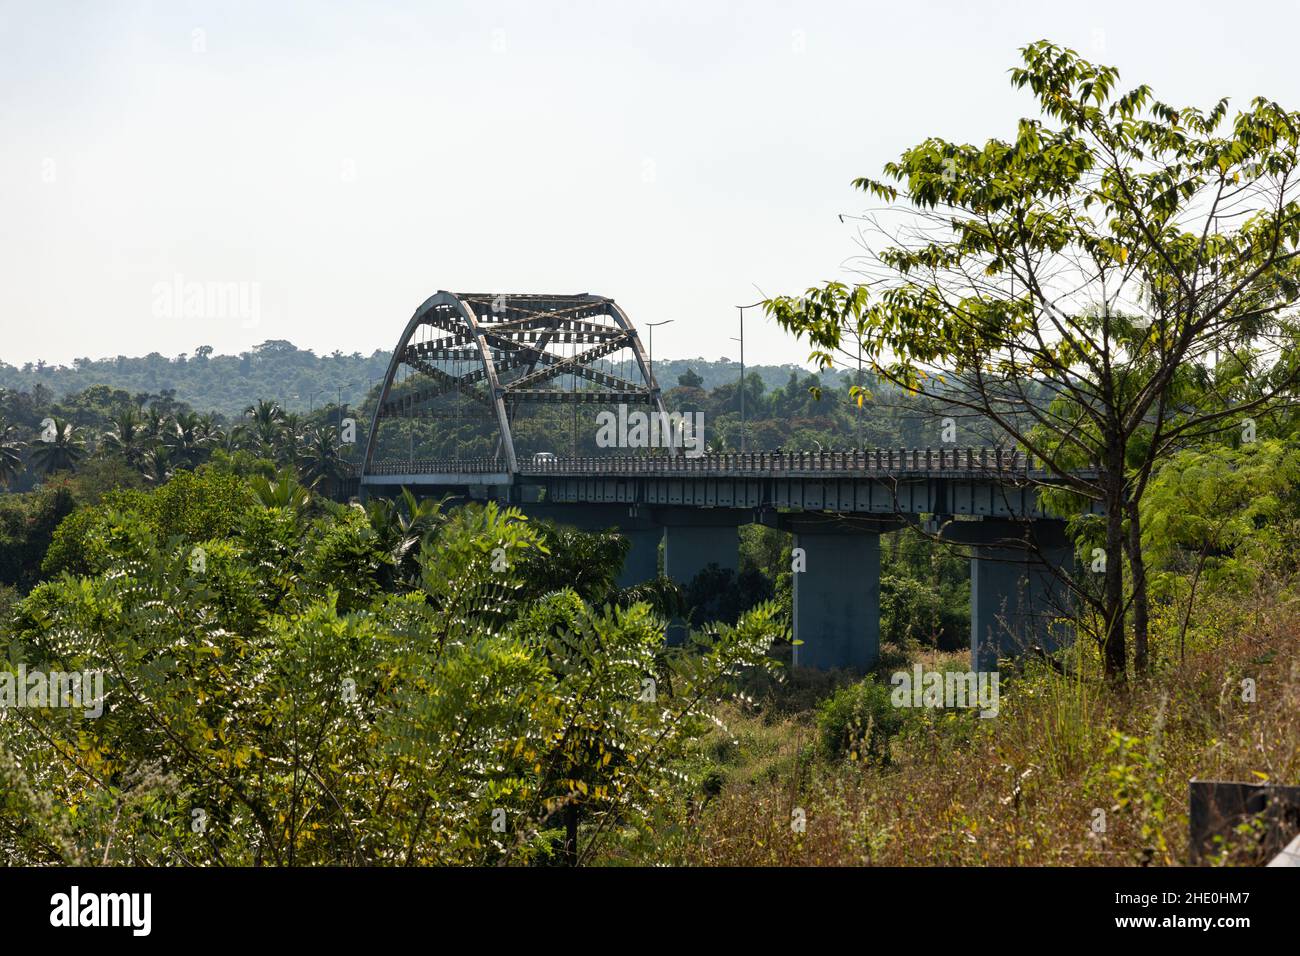 View of the tied steel arch Gandaulim - Marcel Bridge over Cumbarjua Canal in Gandaulim, Goa, India. Stock Photo